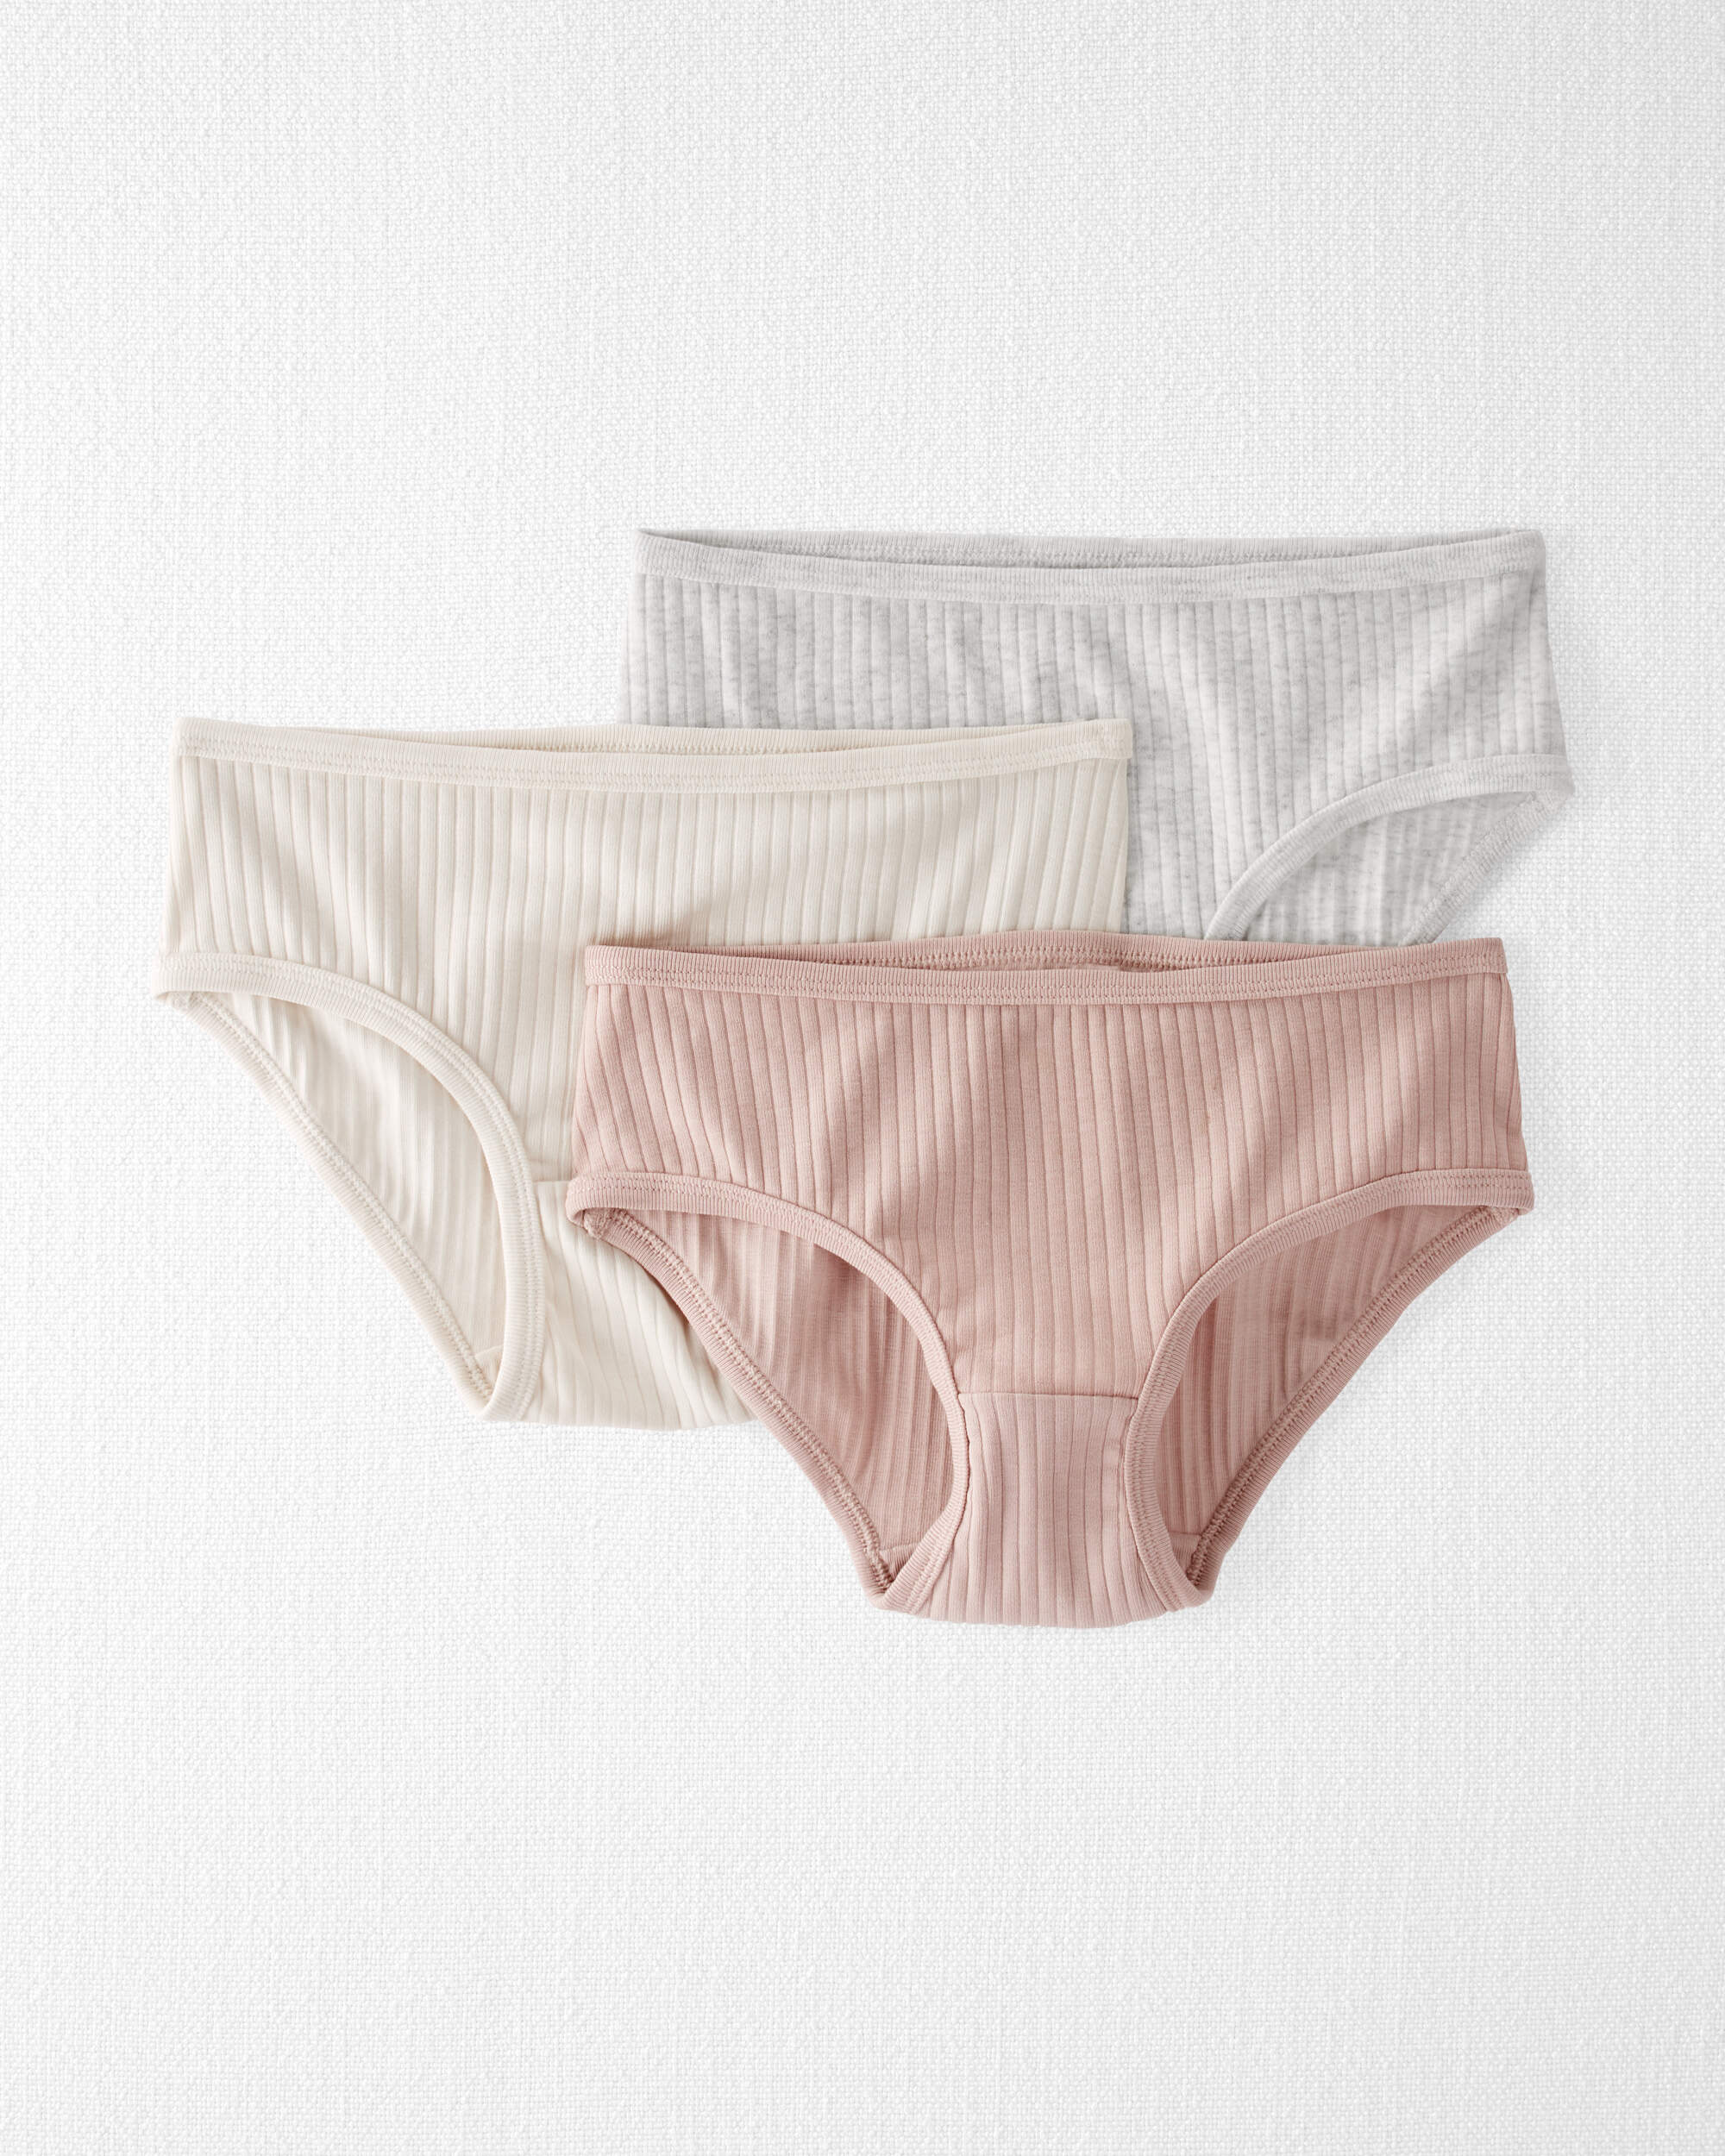 Ketyyh-chn99 Girls Underwear Breathable Toddler Girl Underwear Comfort Baby Girls  Panties Pink,130 